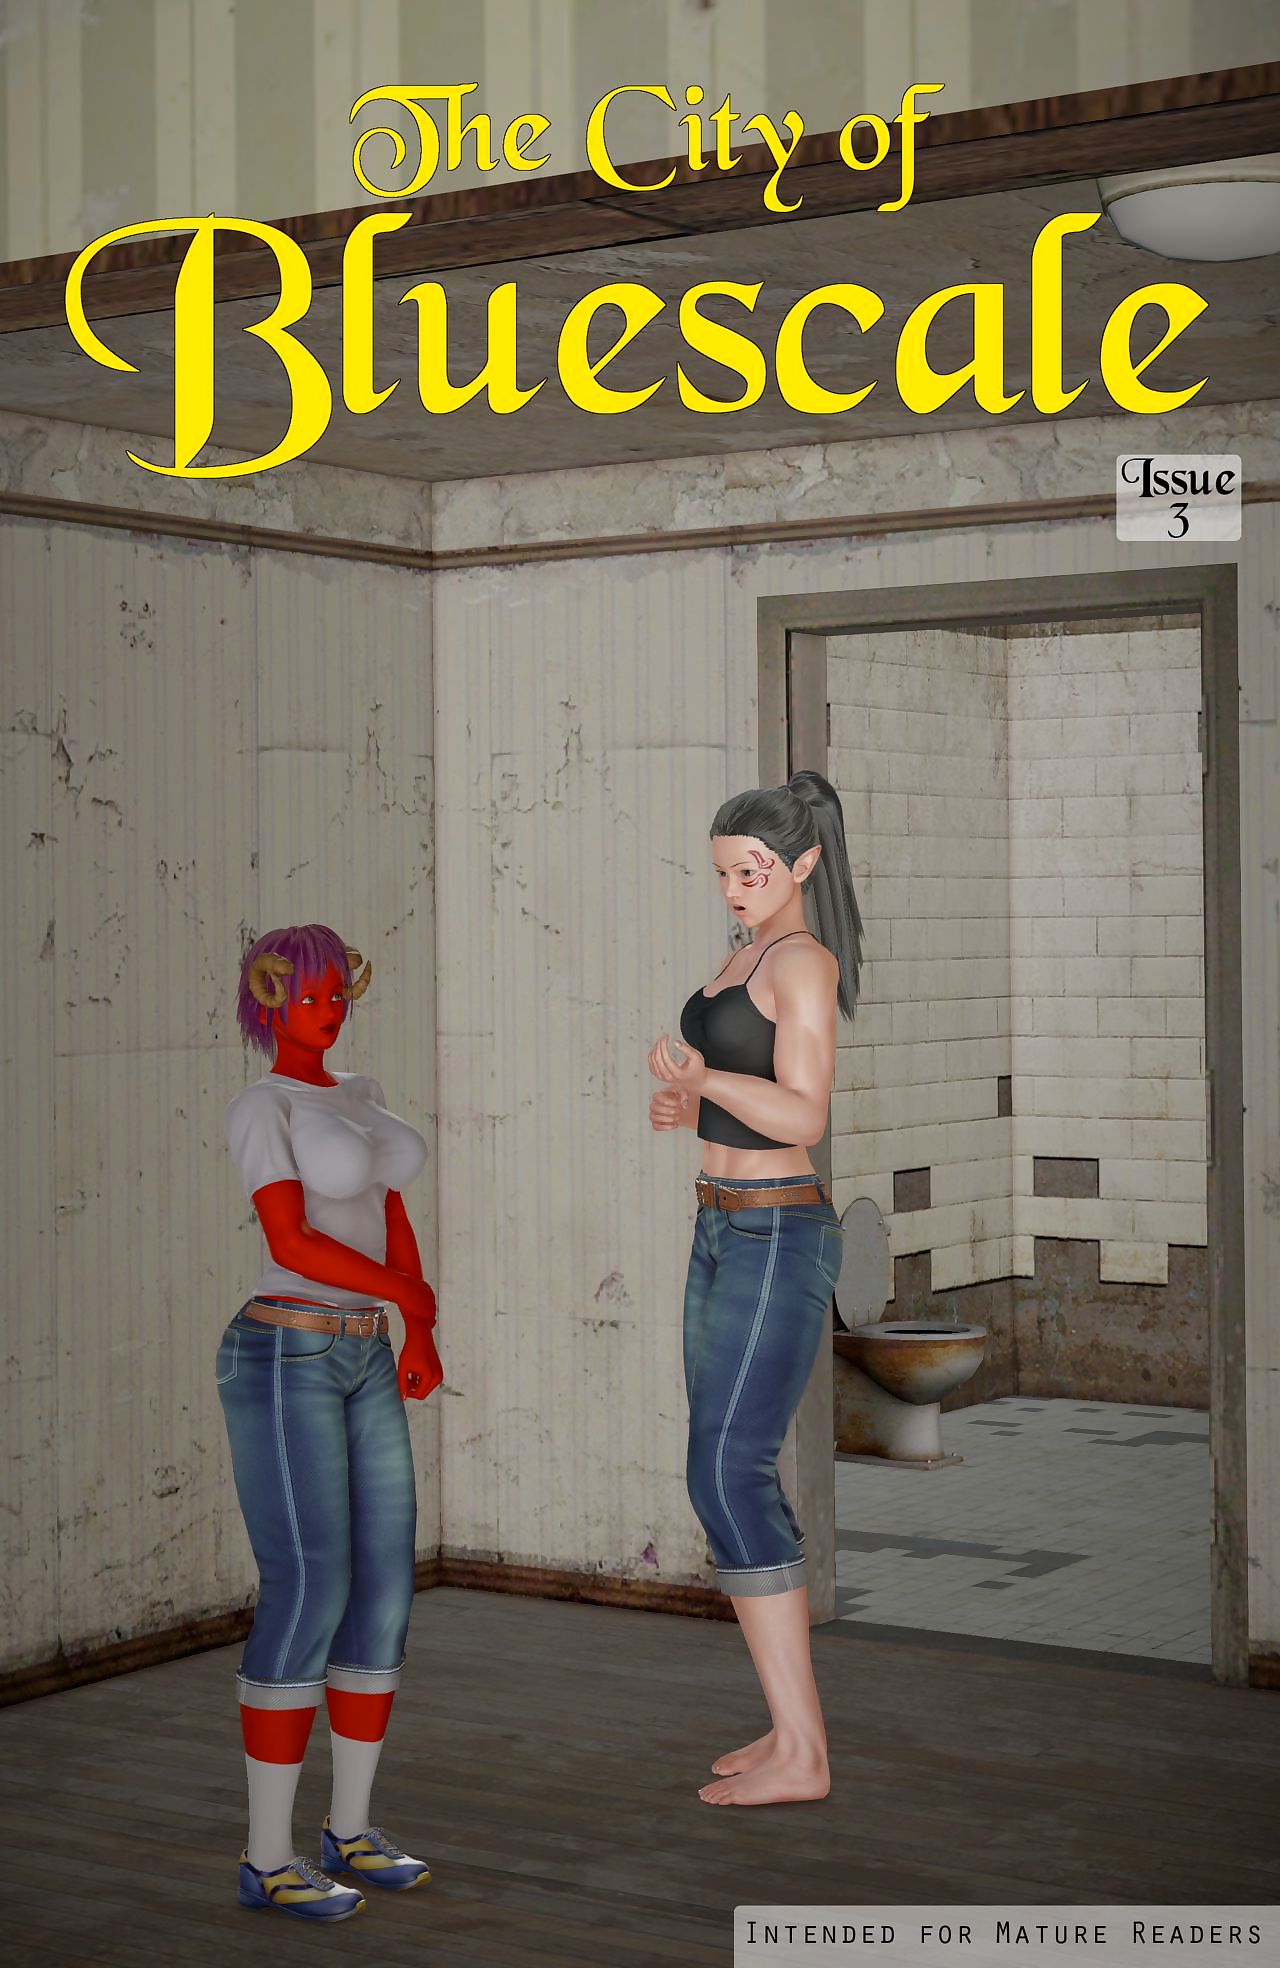 Bluescale Scene 5